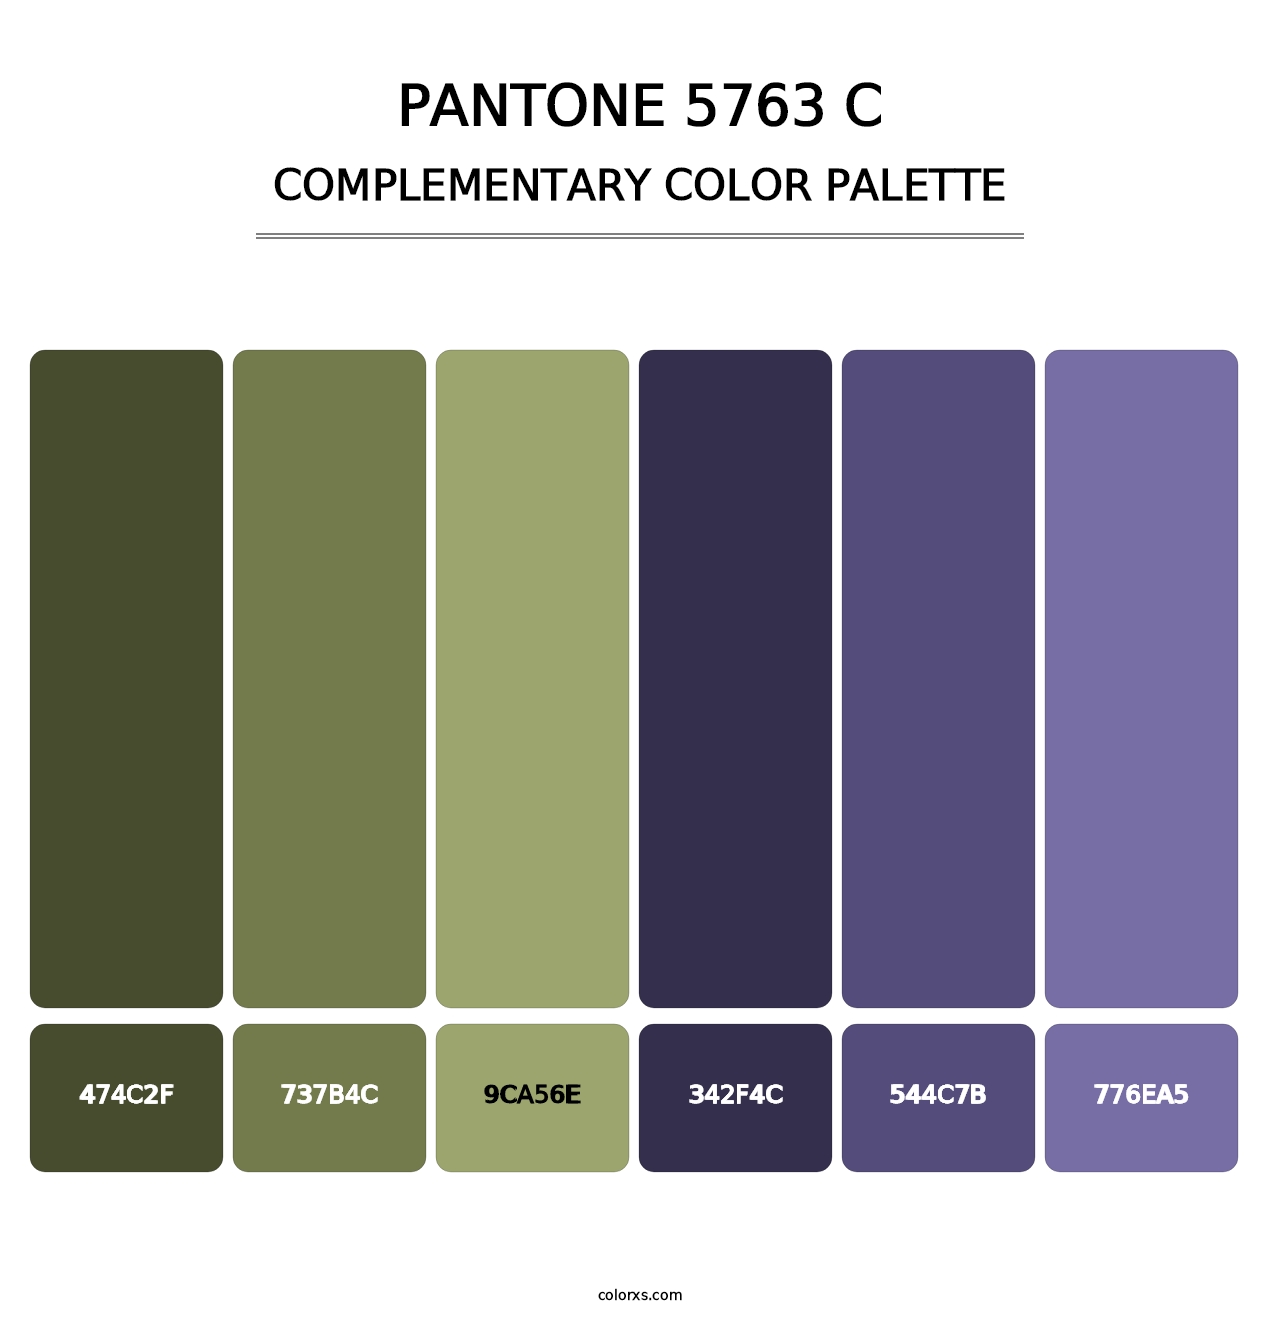 PANTONE 5763 C - Complementary Color Palette